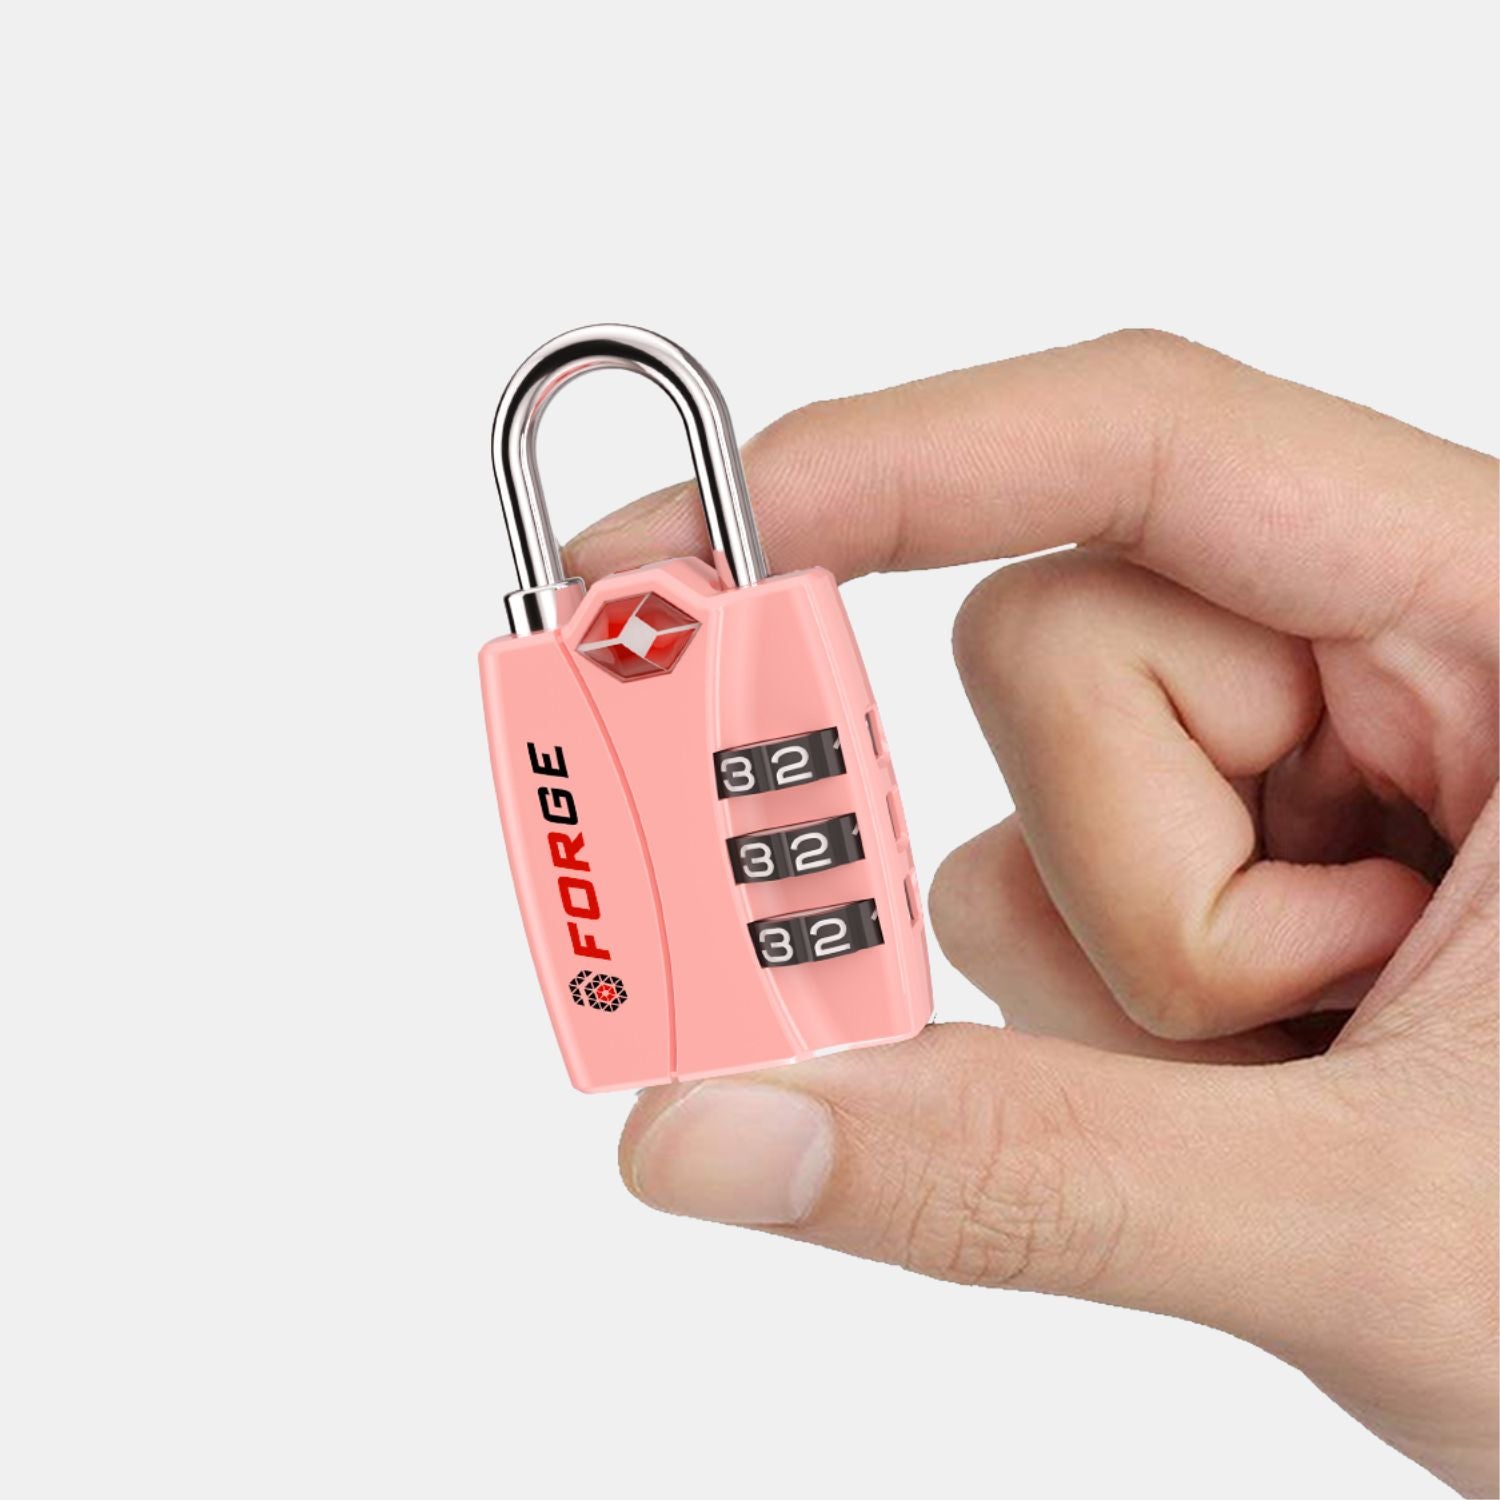 TSA-Approved Luggage Locks: 3-Digit Combination, Open Alert Indicator, Pink 2 Locks